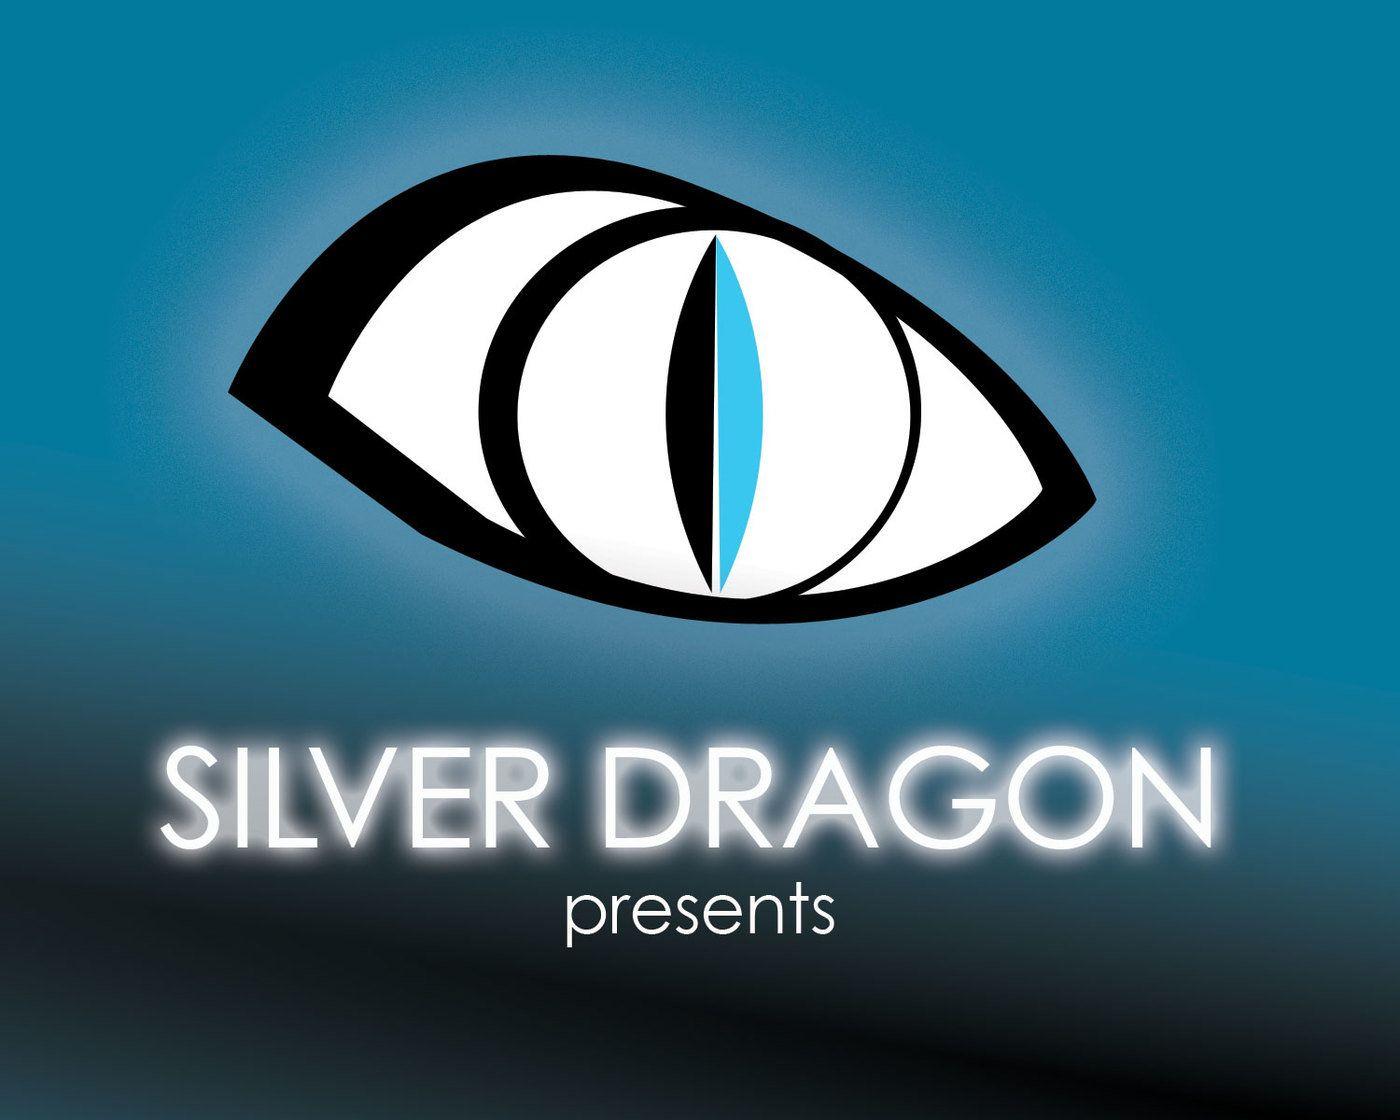 Silver Dragon Logo - Silver Dragon logo by William Kim at Coroflot.com